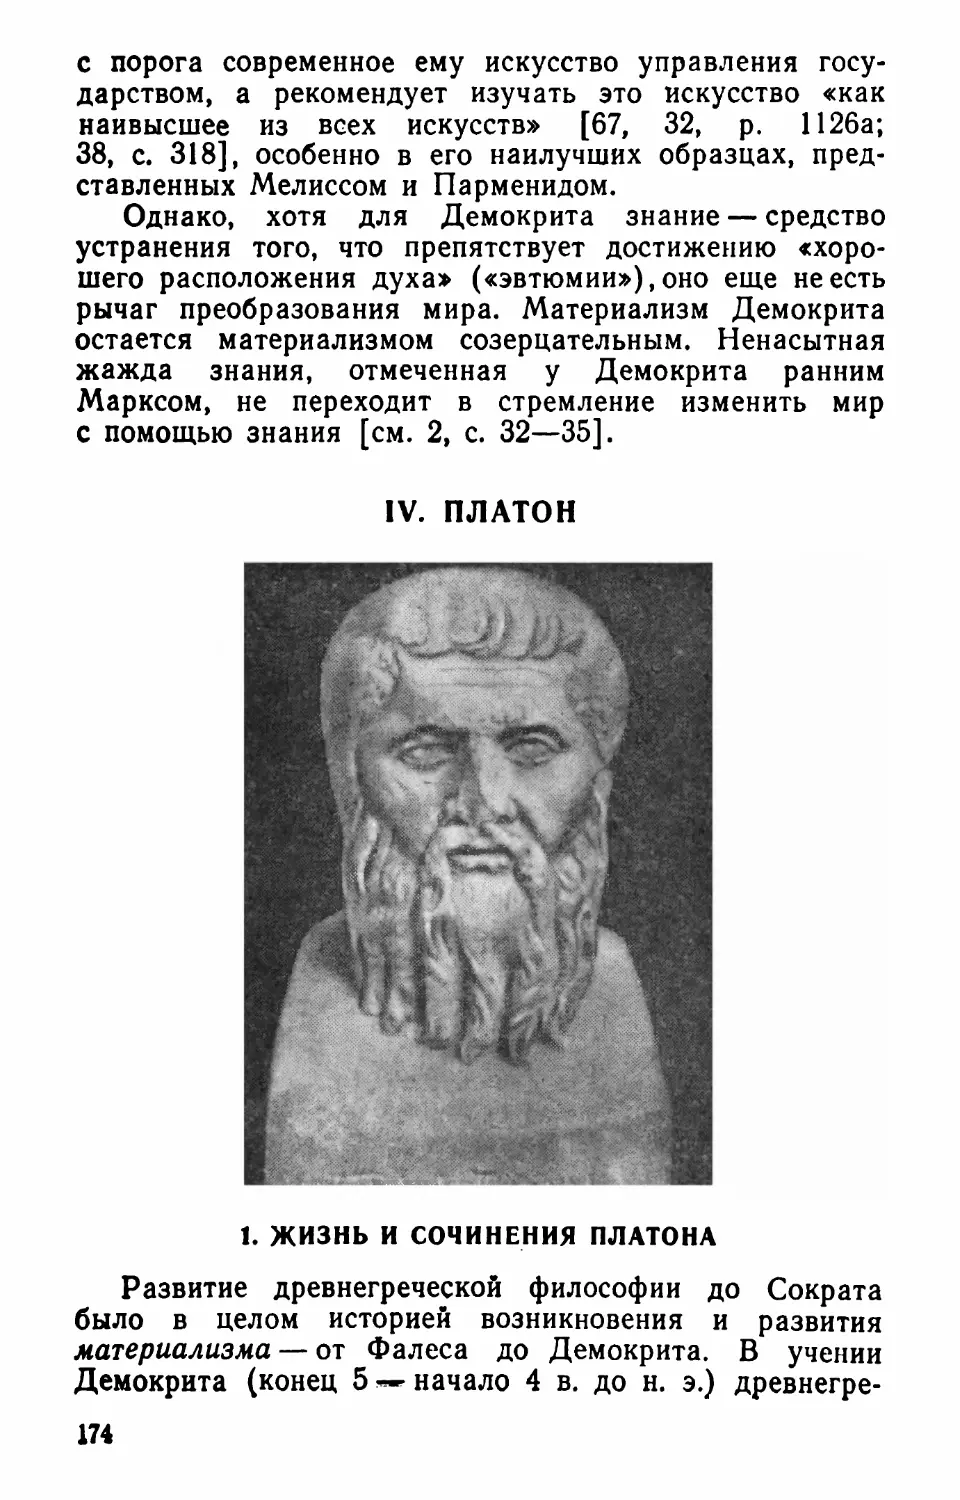 IV. Платон